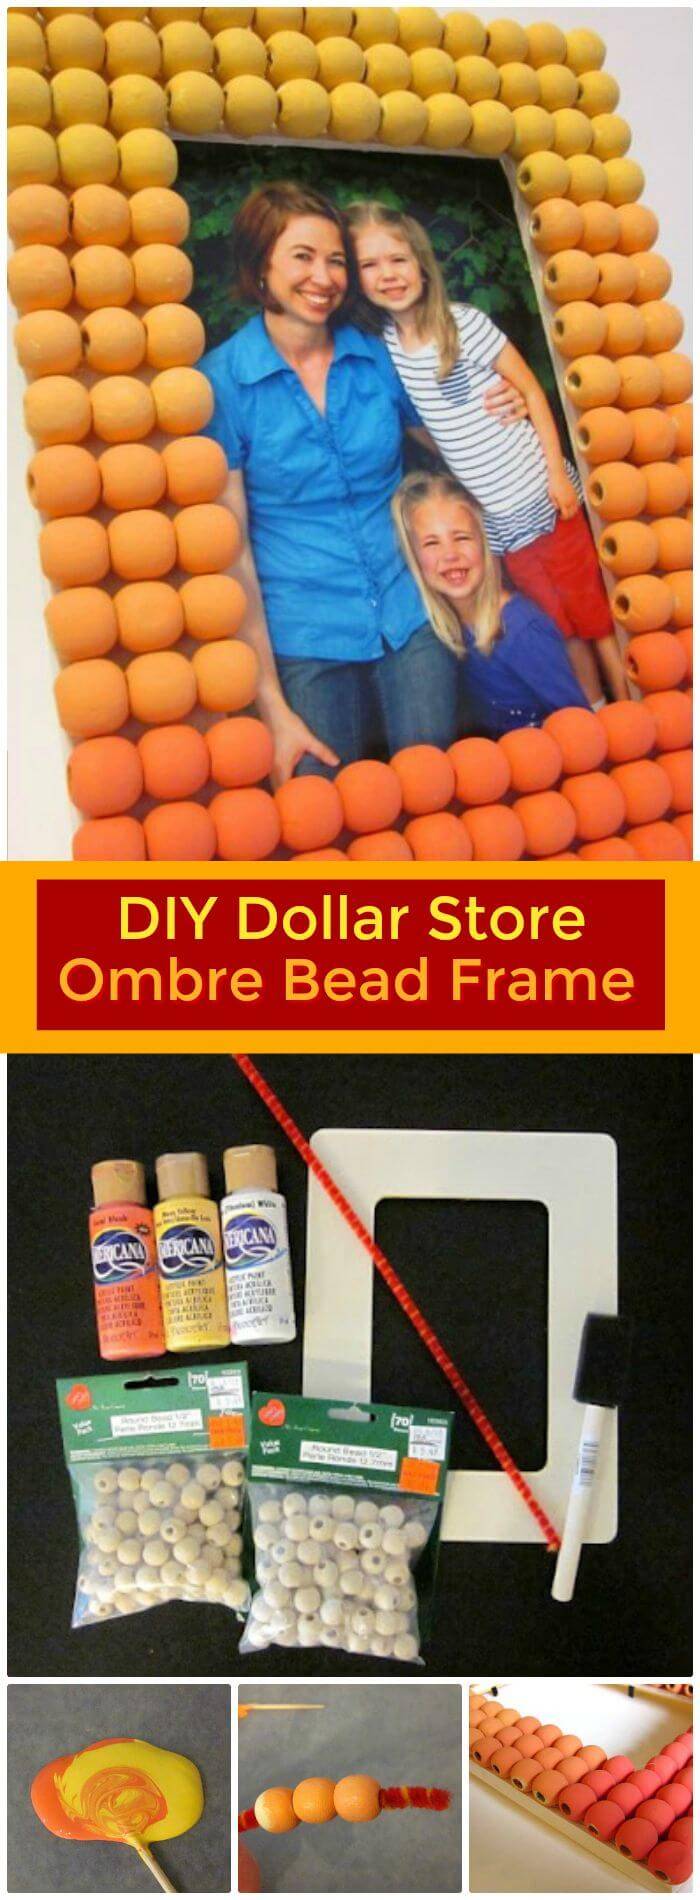 DIY Dollar Store Ombre Bead Frame 